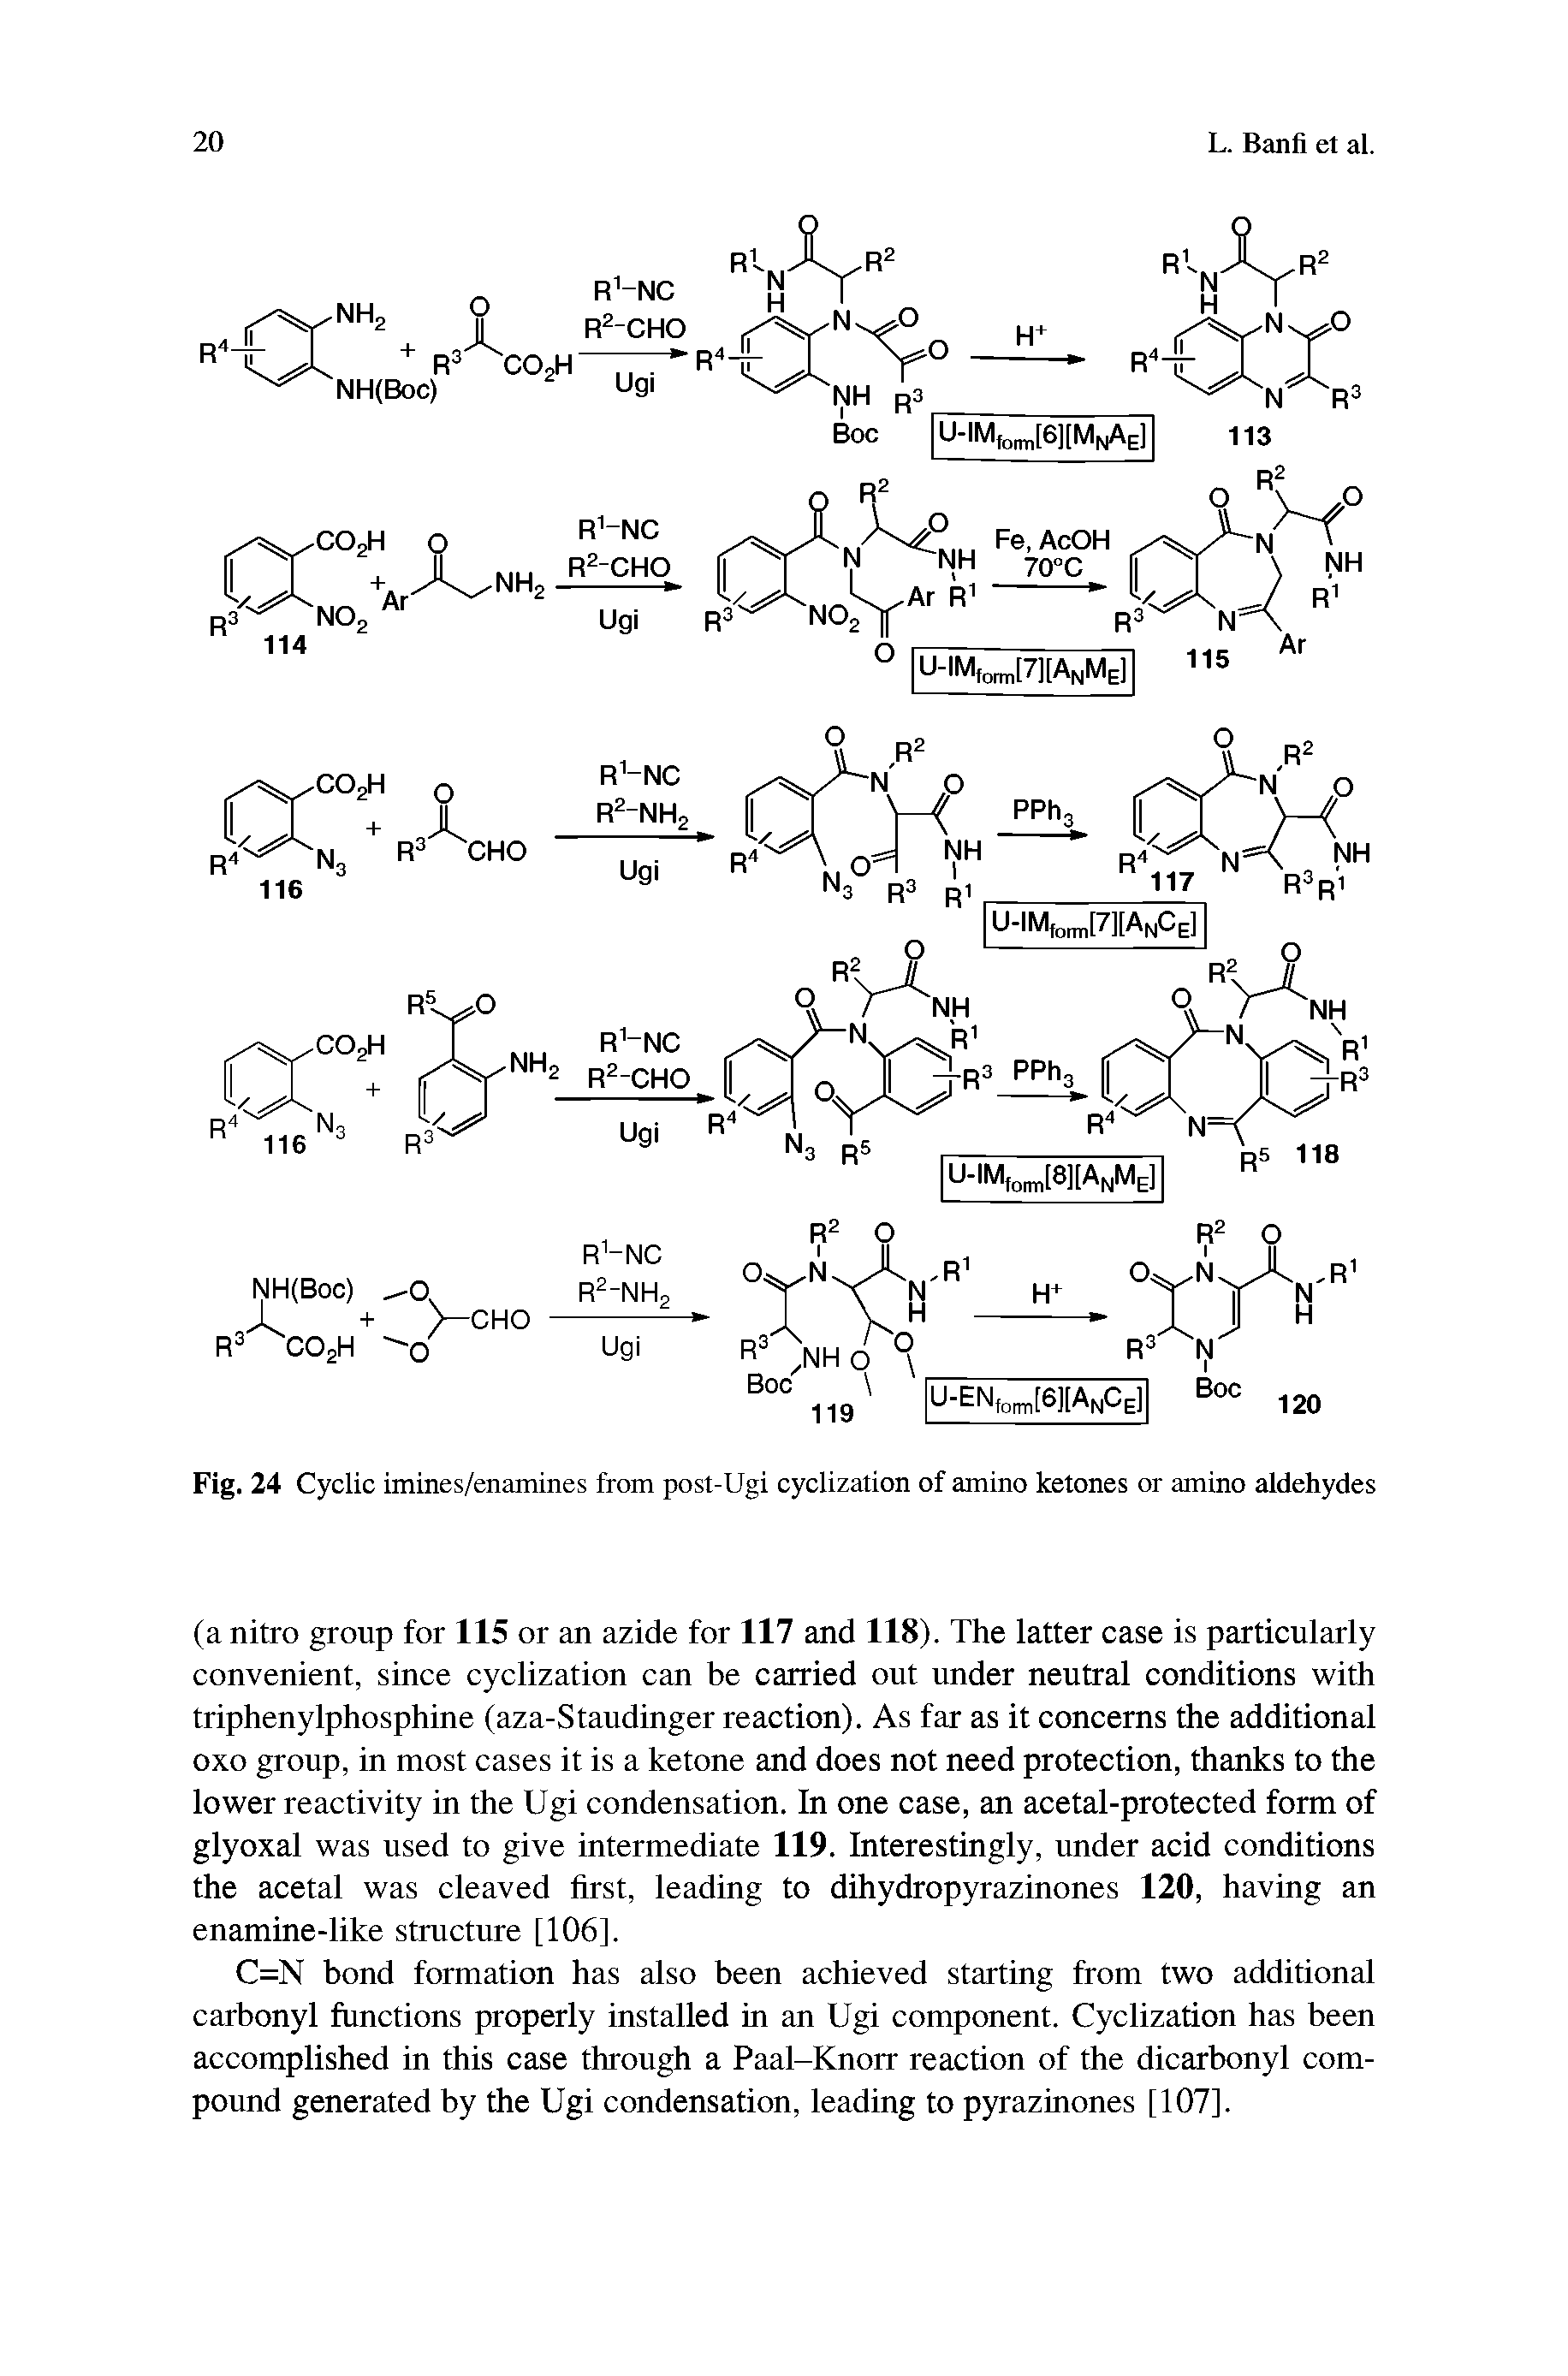 Fig. 24 Cyclic imines/enamines from post-Ugi cyclization of amino ketones or amino aldehydes...